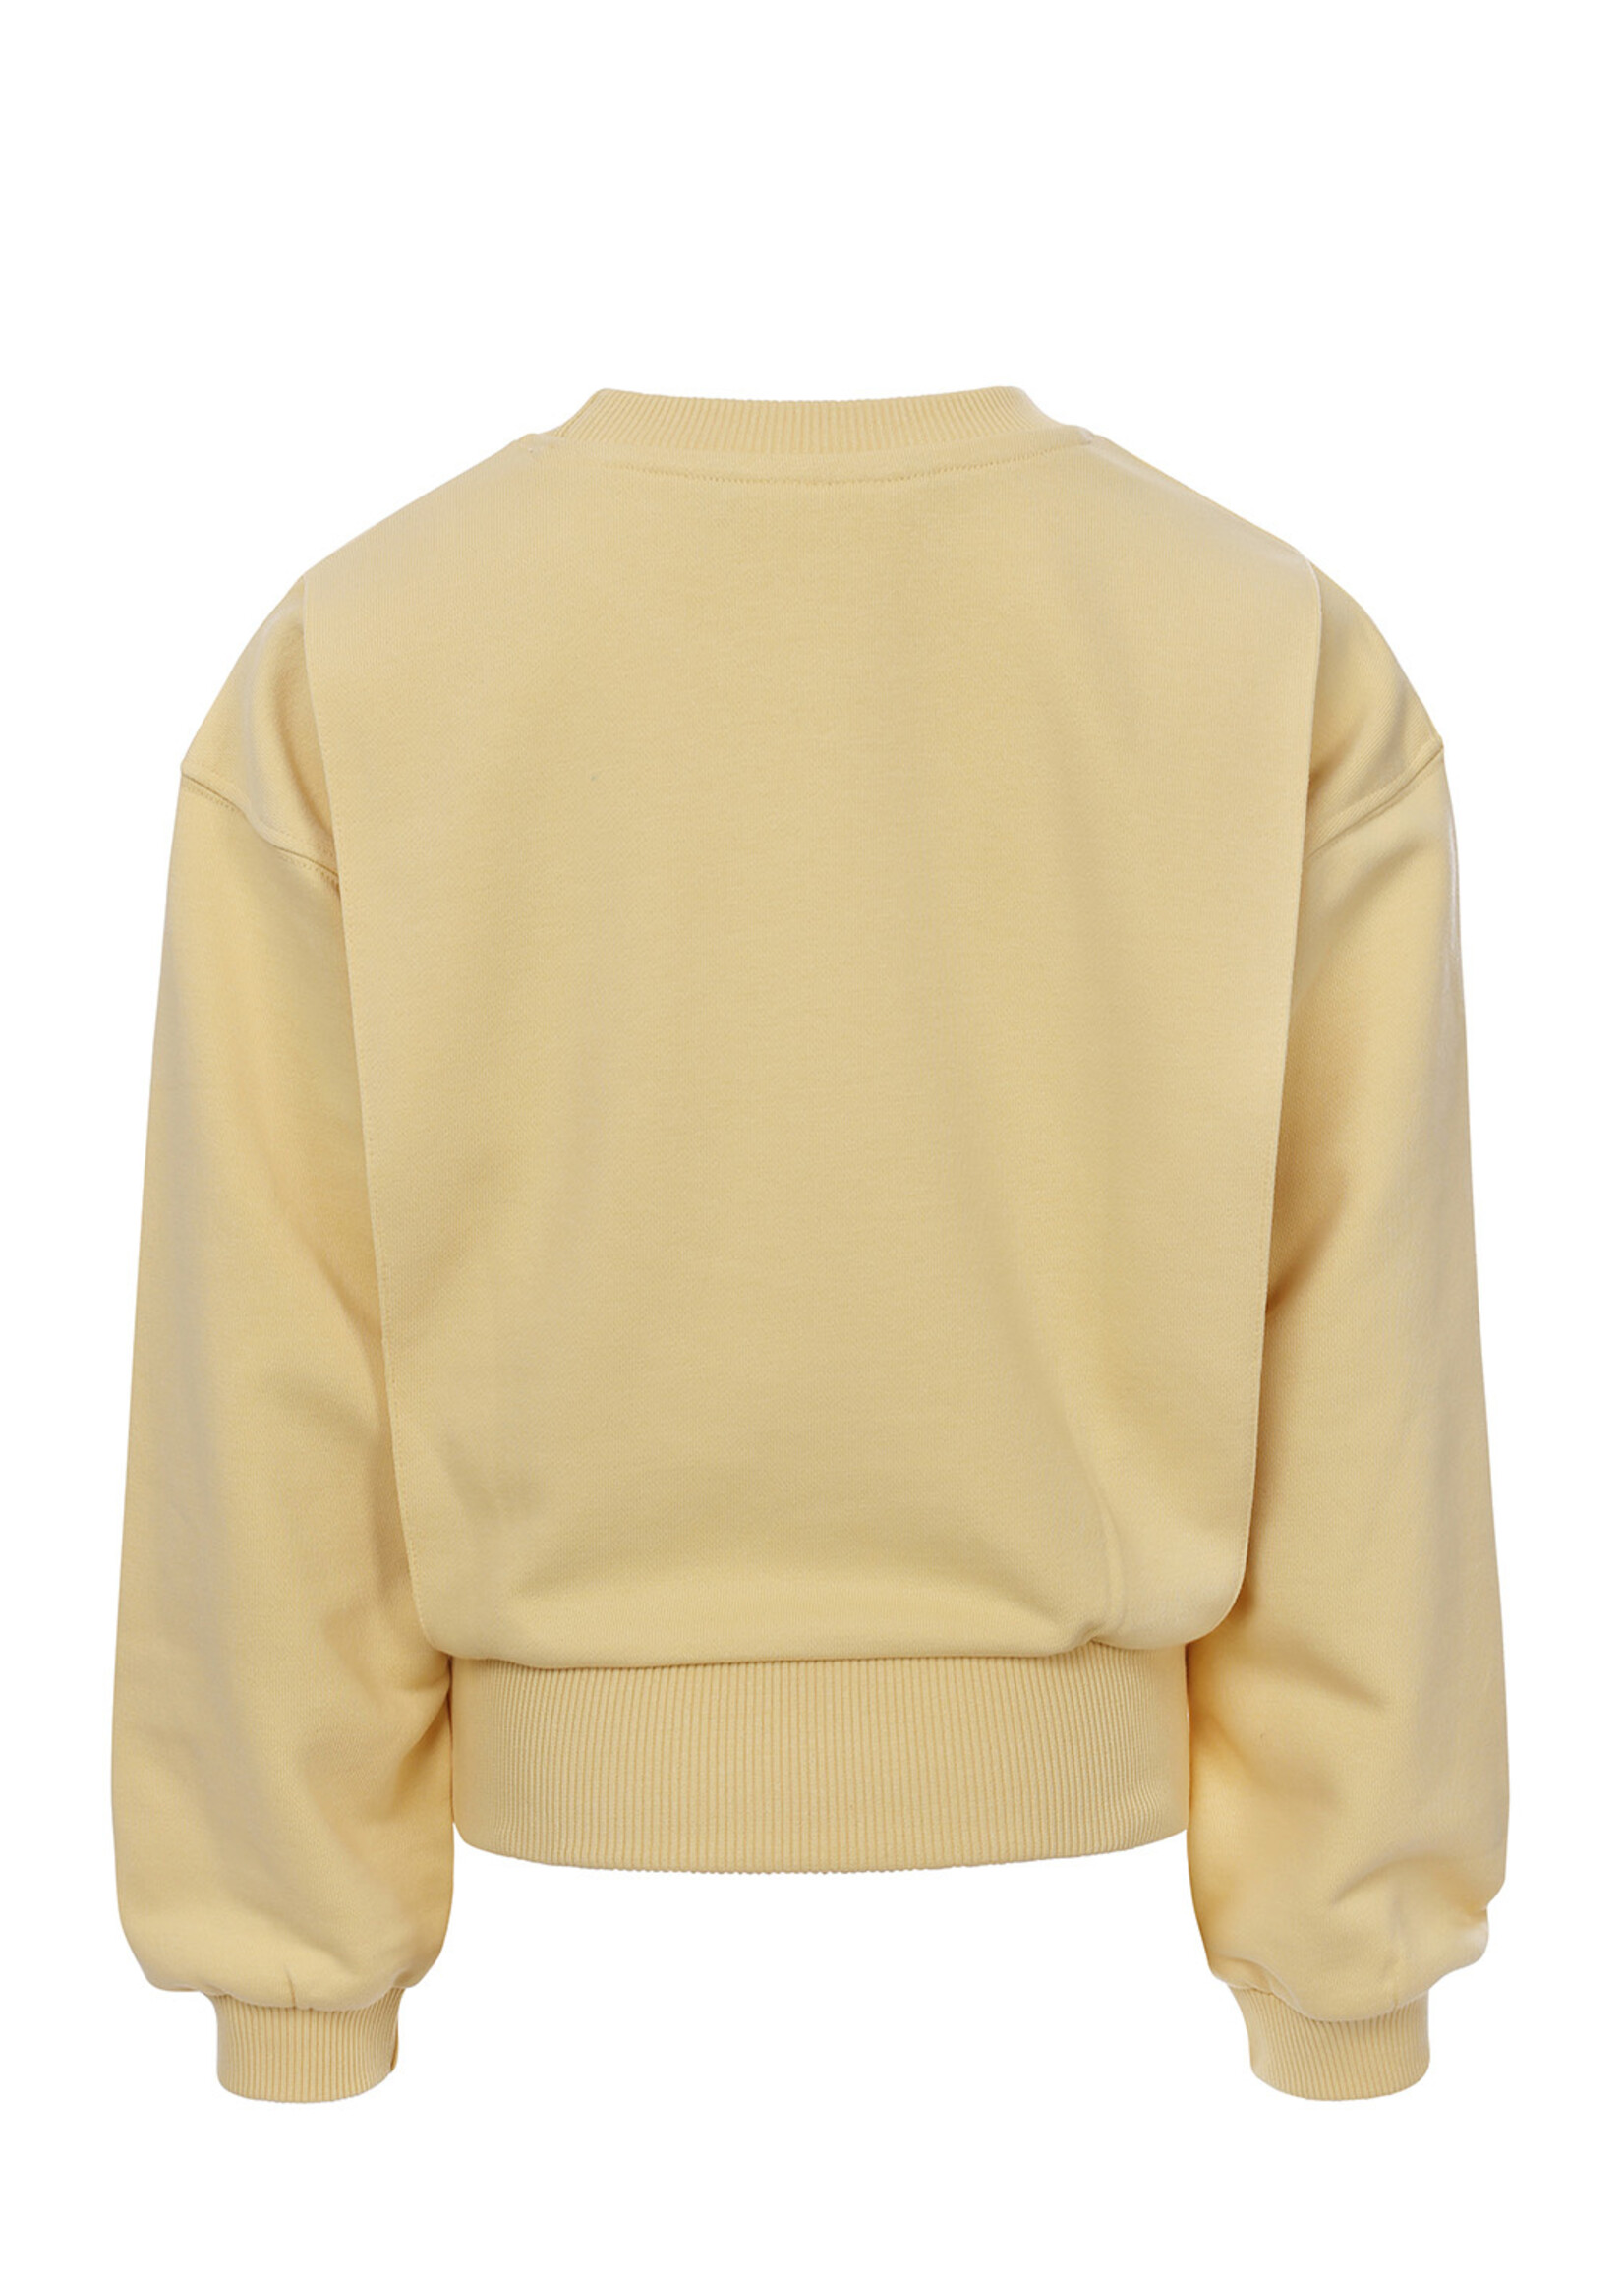 LOOXS 10sixteen 10Sixteen sweater Soft yellow